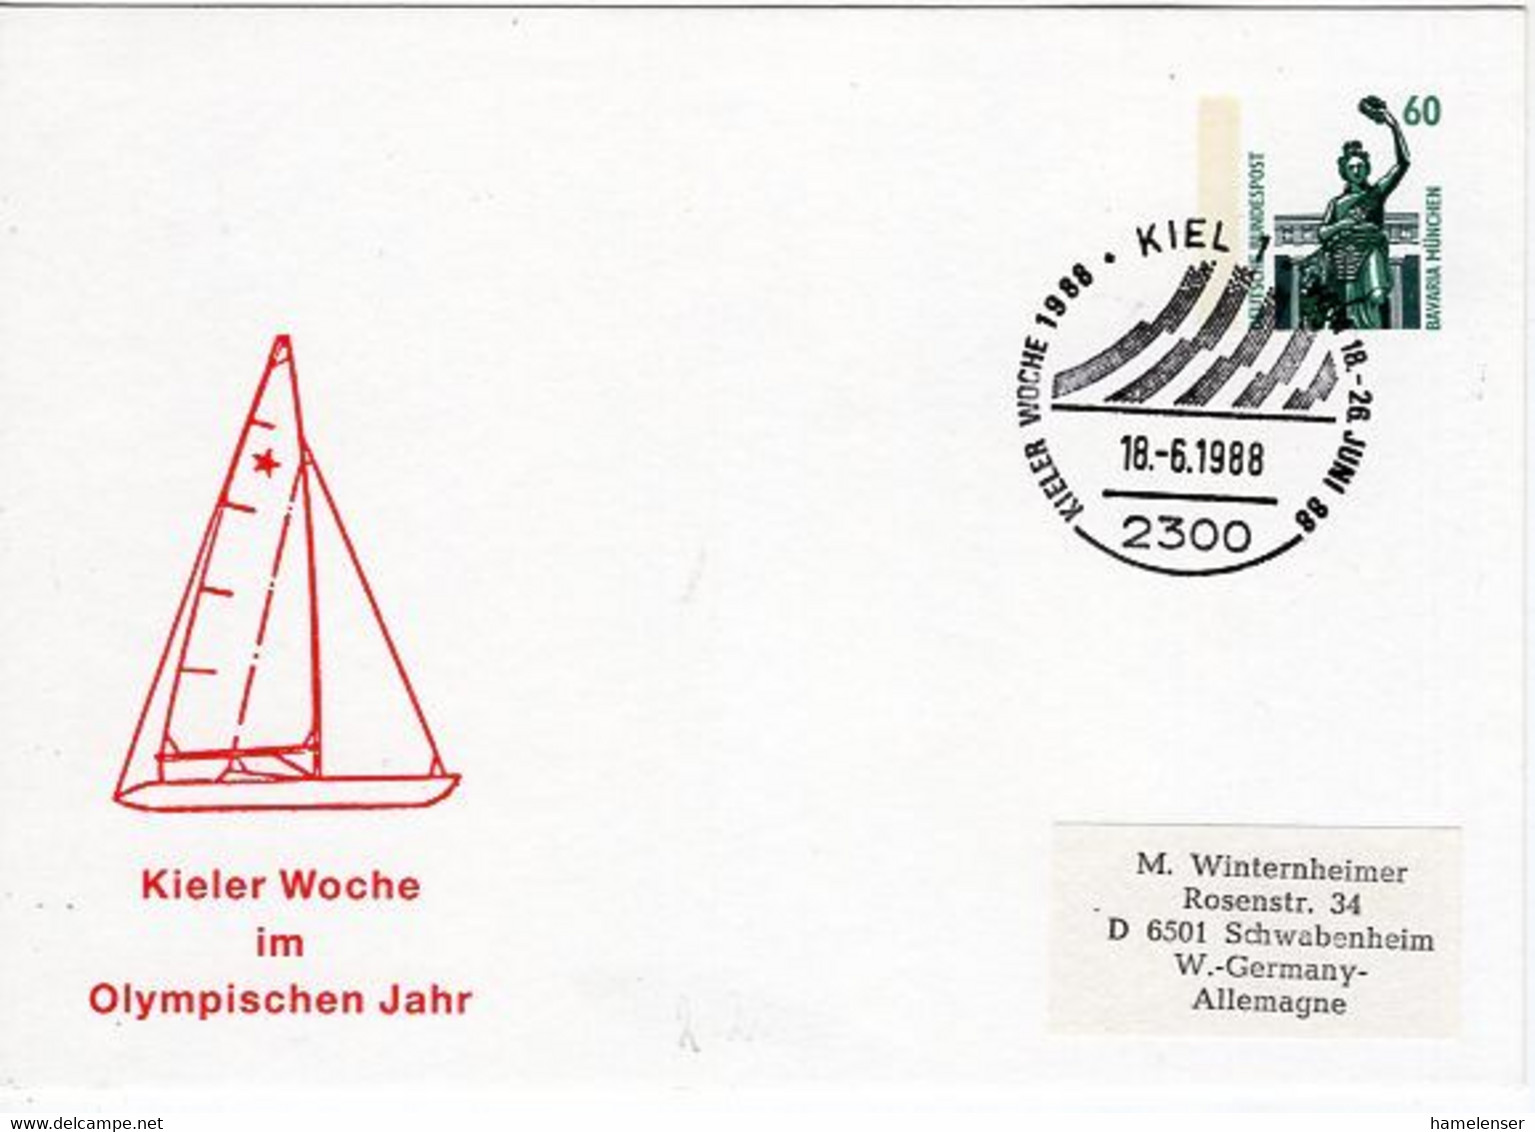 53704 - Bund - 1988 - 60Pfg SWK PGAKte "Kieler Woche" SoStpl KIEL - KIELER WOCHE -> Schwabenheim - Zeilen